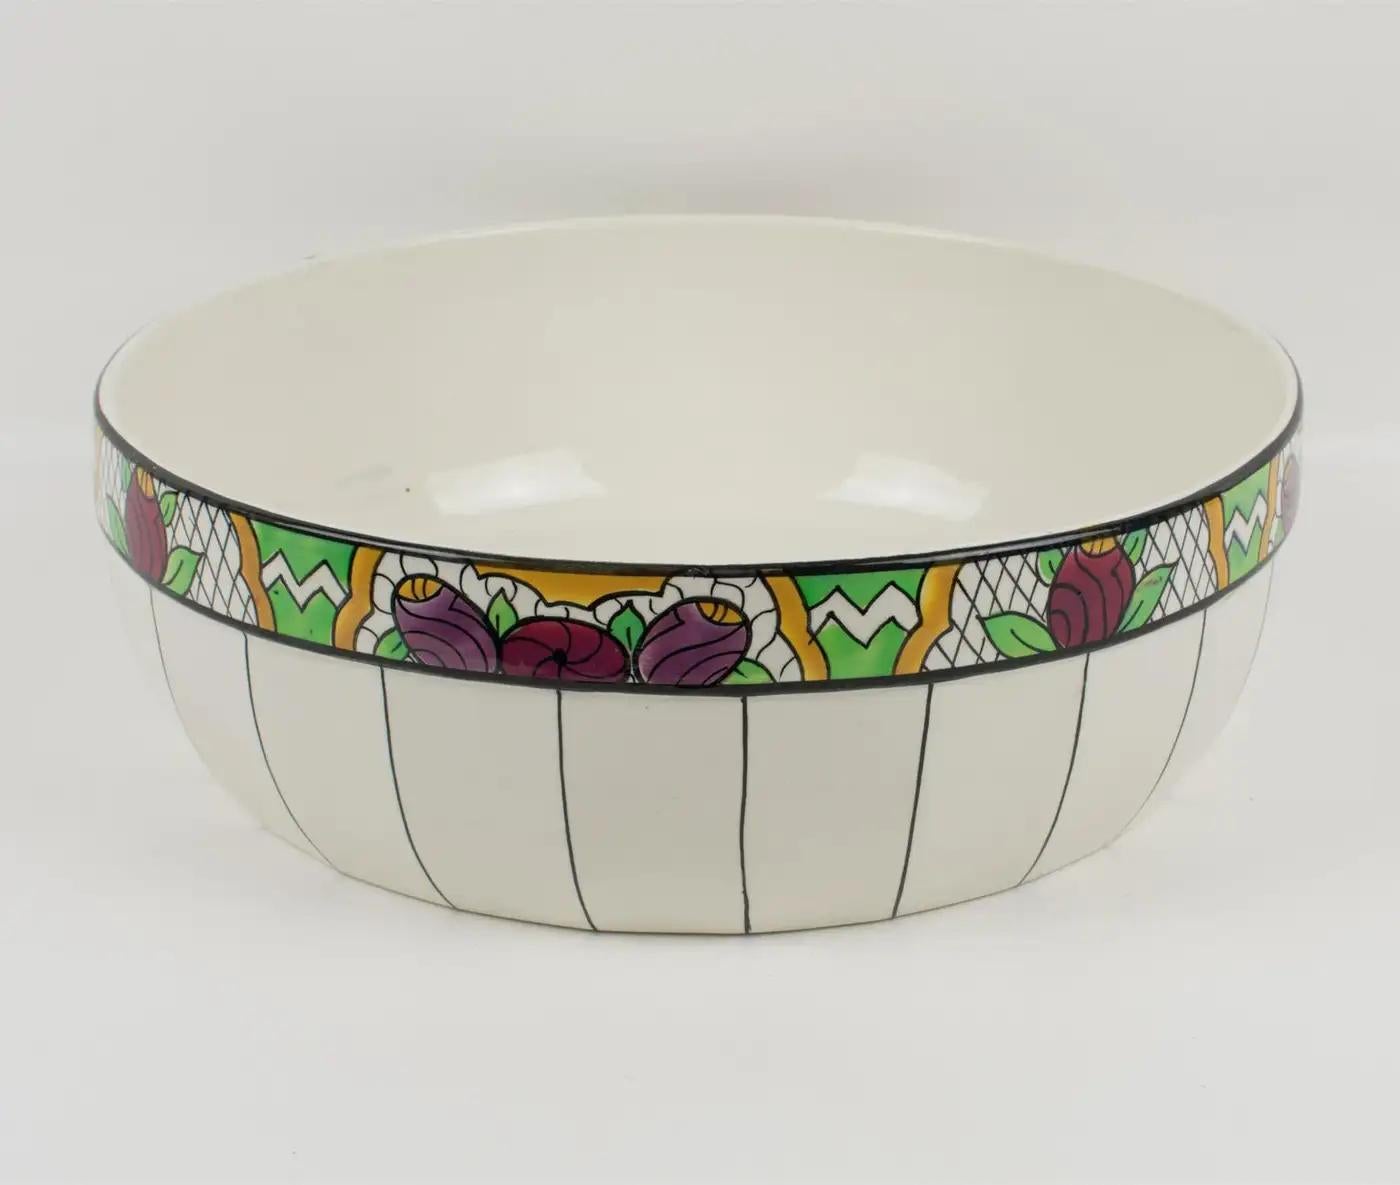 Belgian Art Deco Auguste Mouzin Ceramic Toiletry Dresser Bowl, Pitcher and Boxes Set For Sale